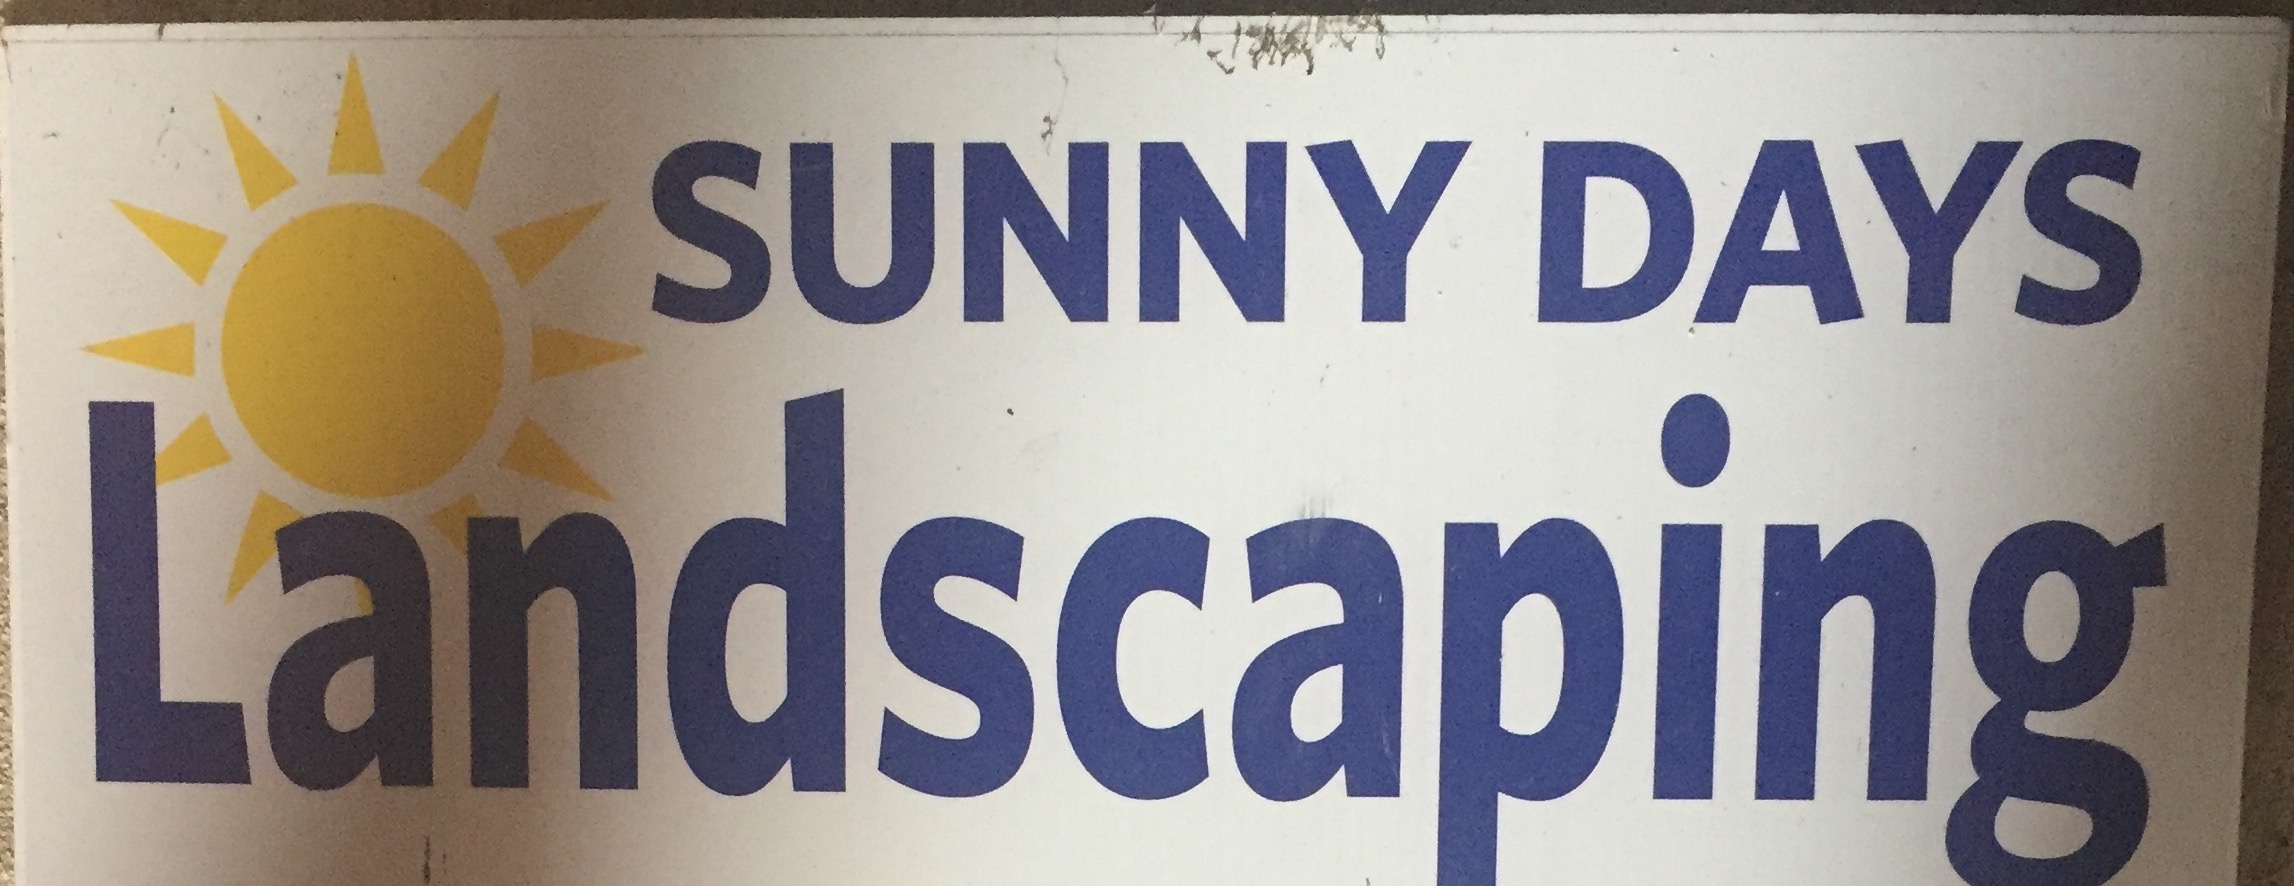 Sunny Days Landscaping Logo